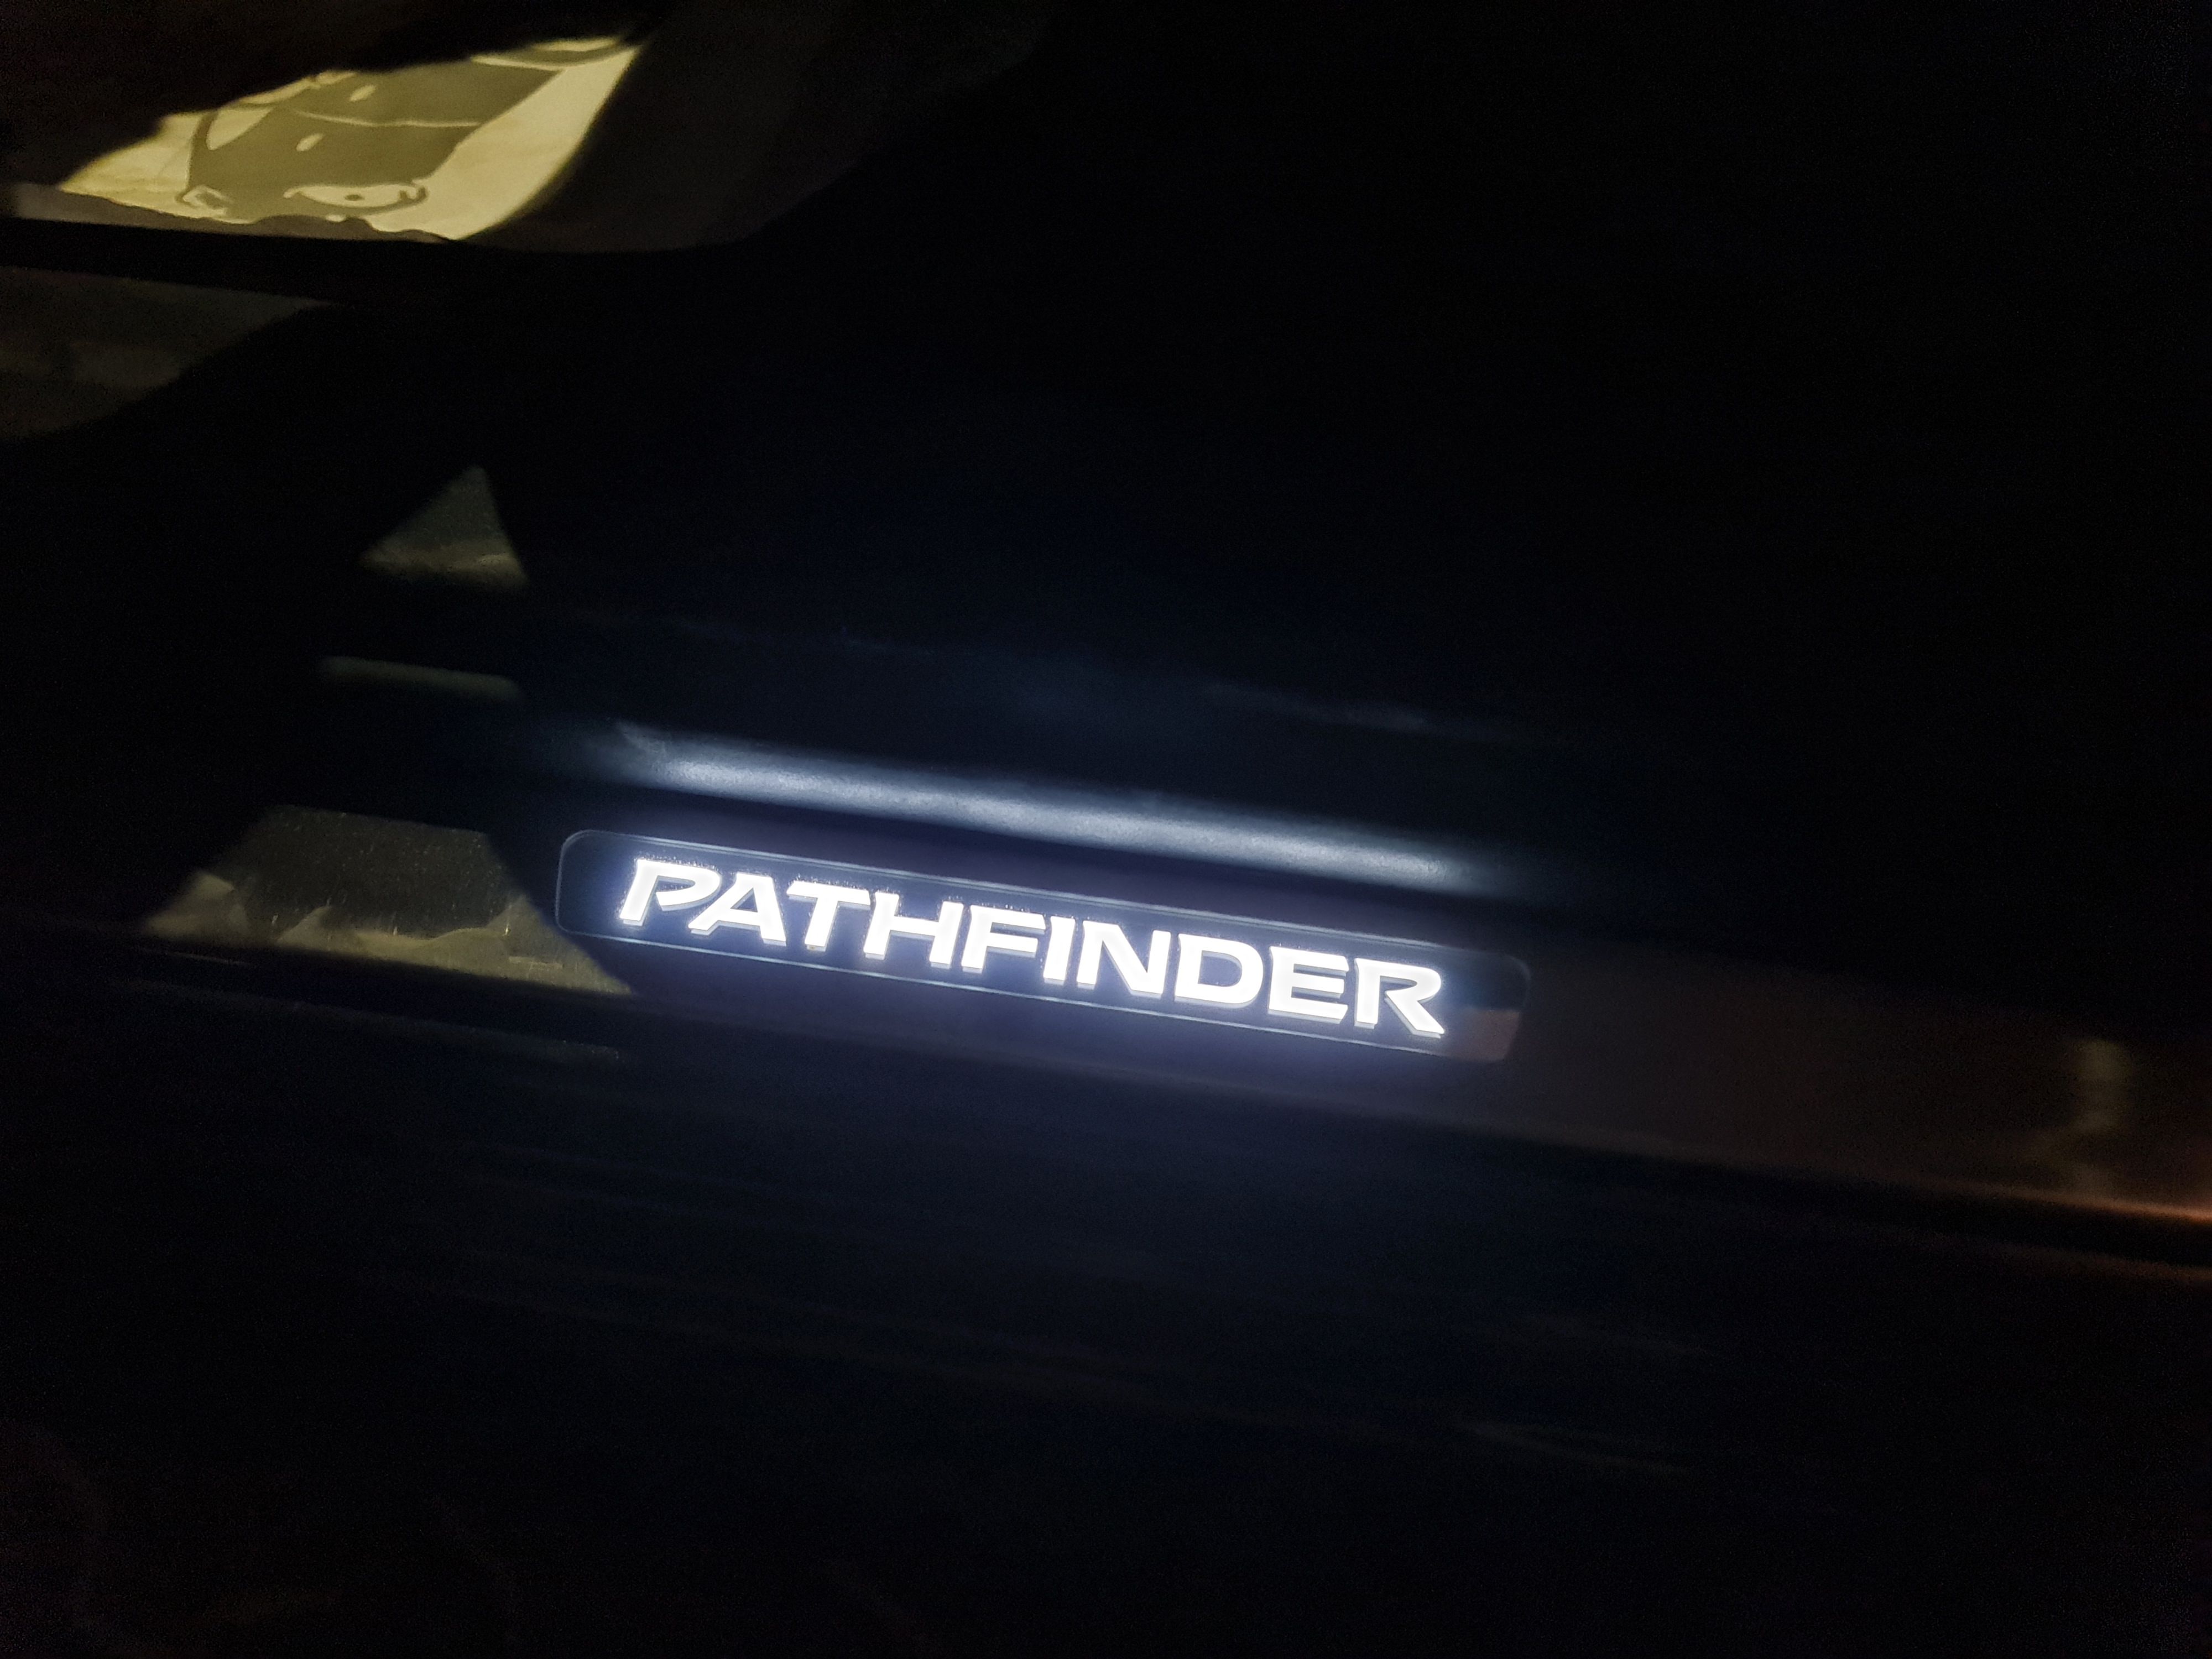 2019 Nissan Pathfinder in dubai